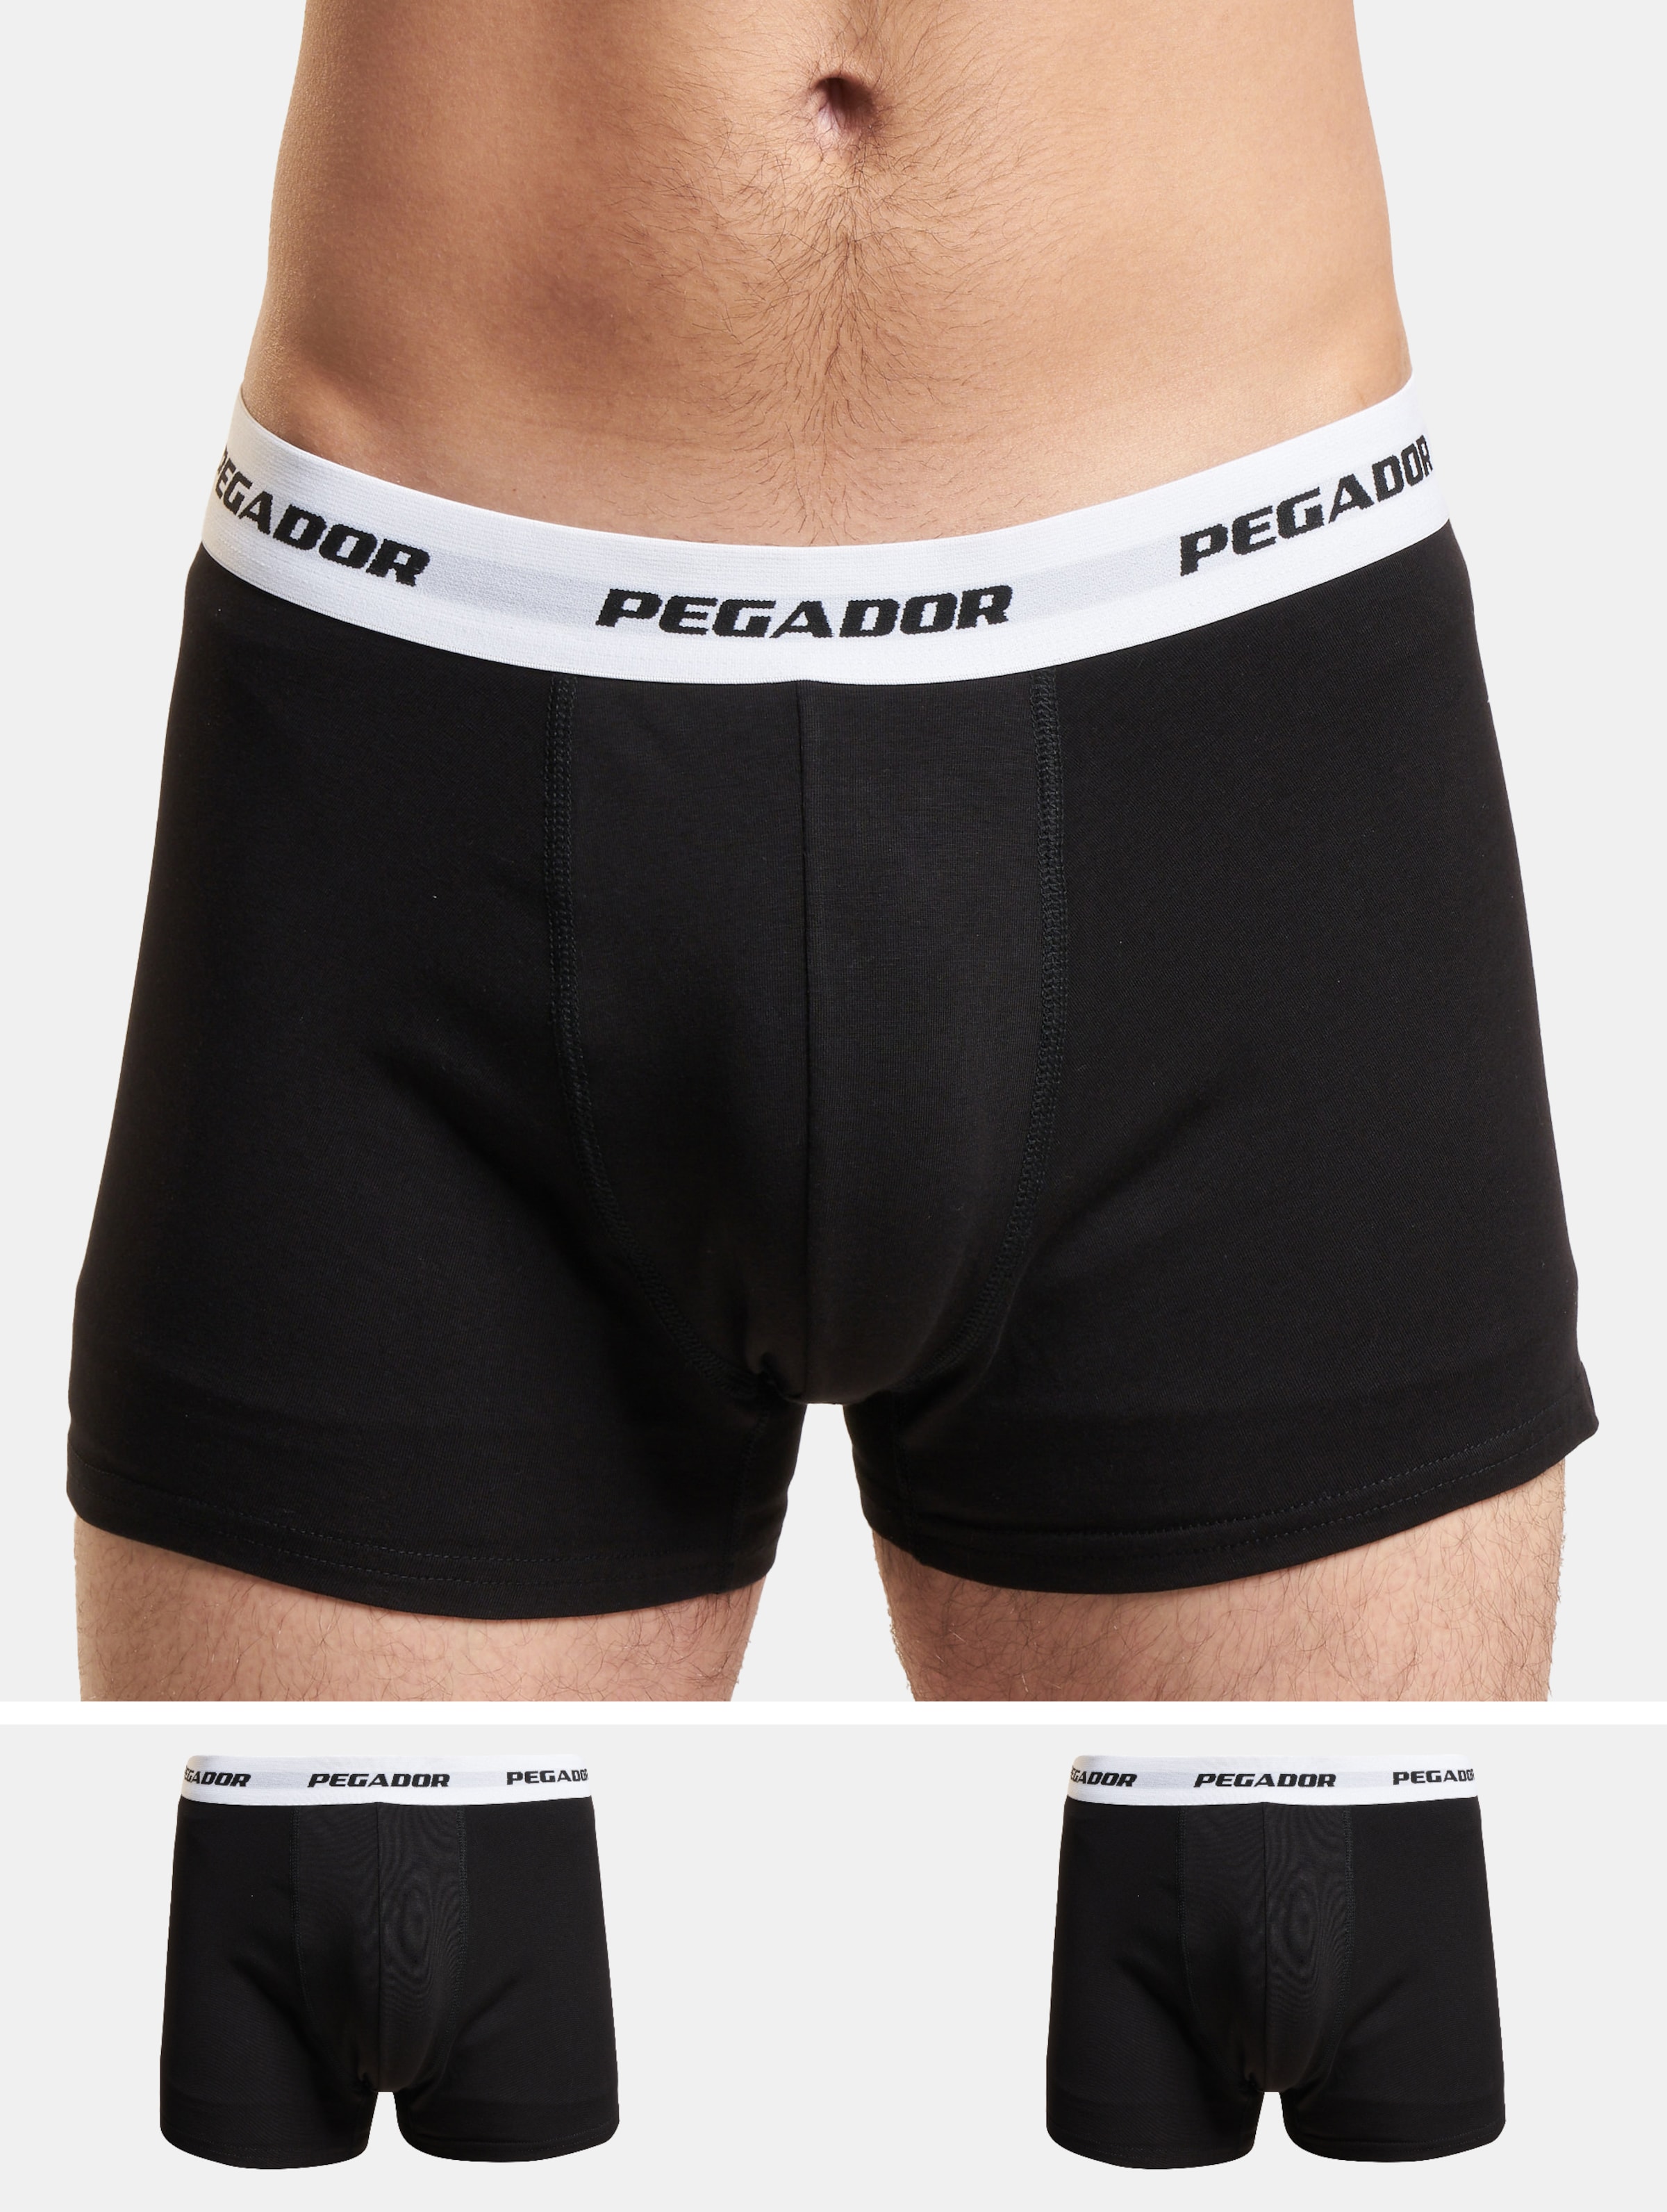 PEGADOR Ango 3er Pack Boxershorts Männer,Unisex op kleur zwart, Maat L